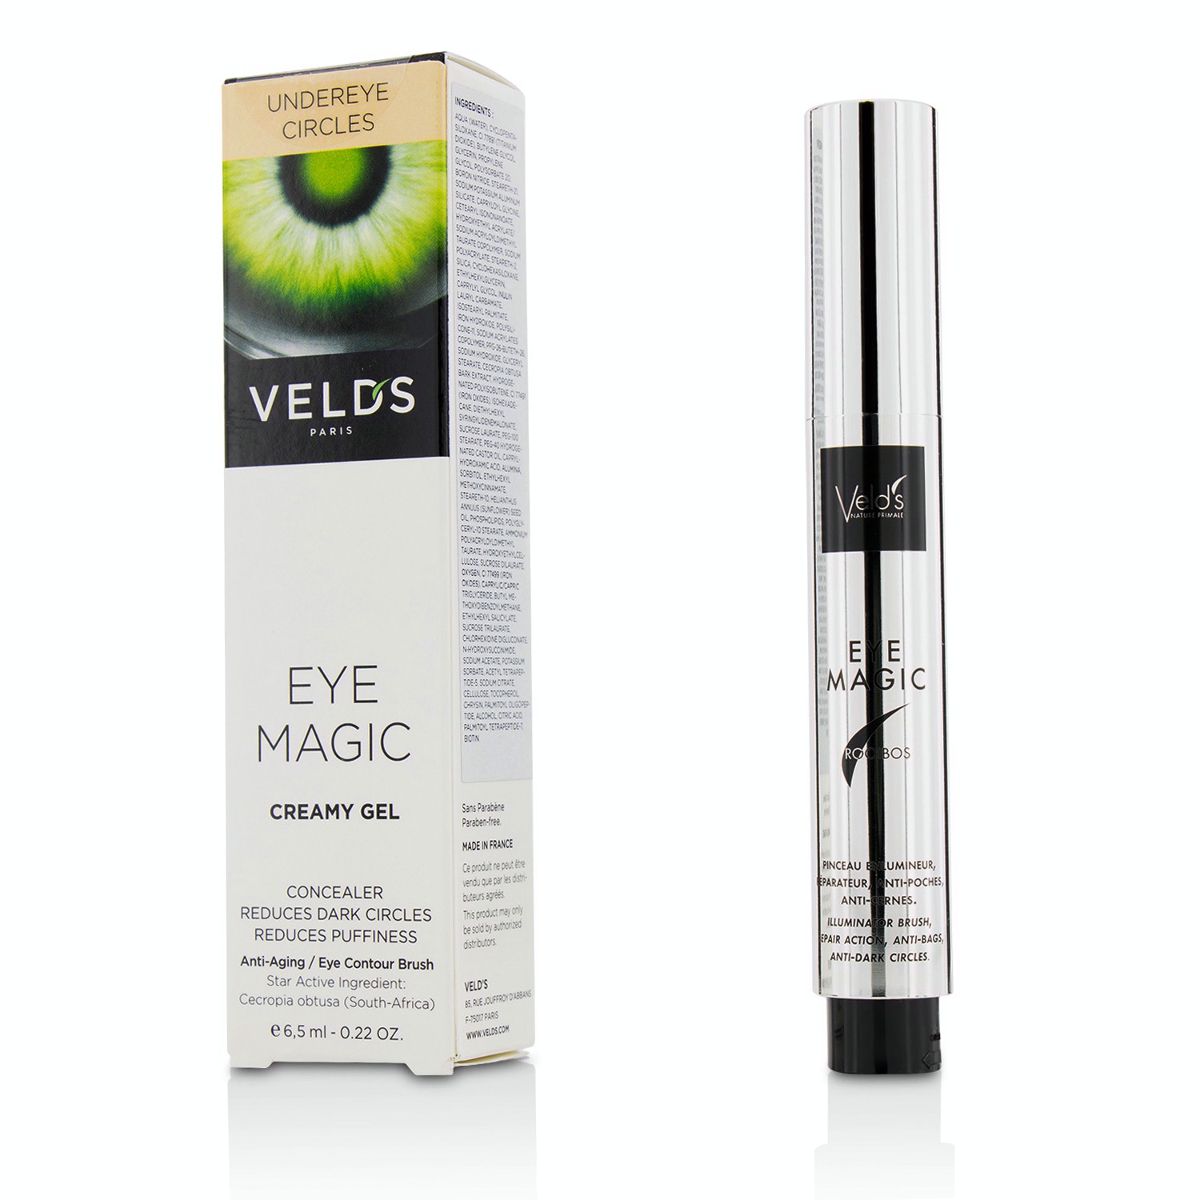 Eye Magic Creamy Gel - Anti-Aging Undereye Circles Eye Contour Brush Velds Image